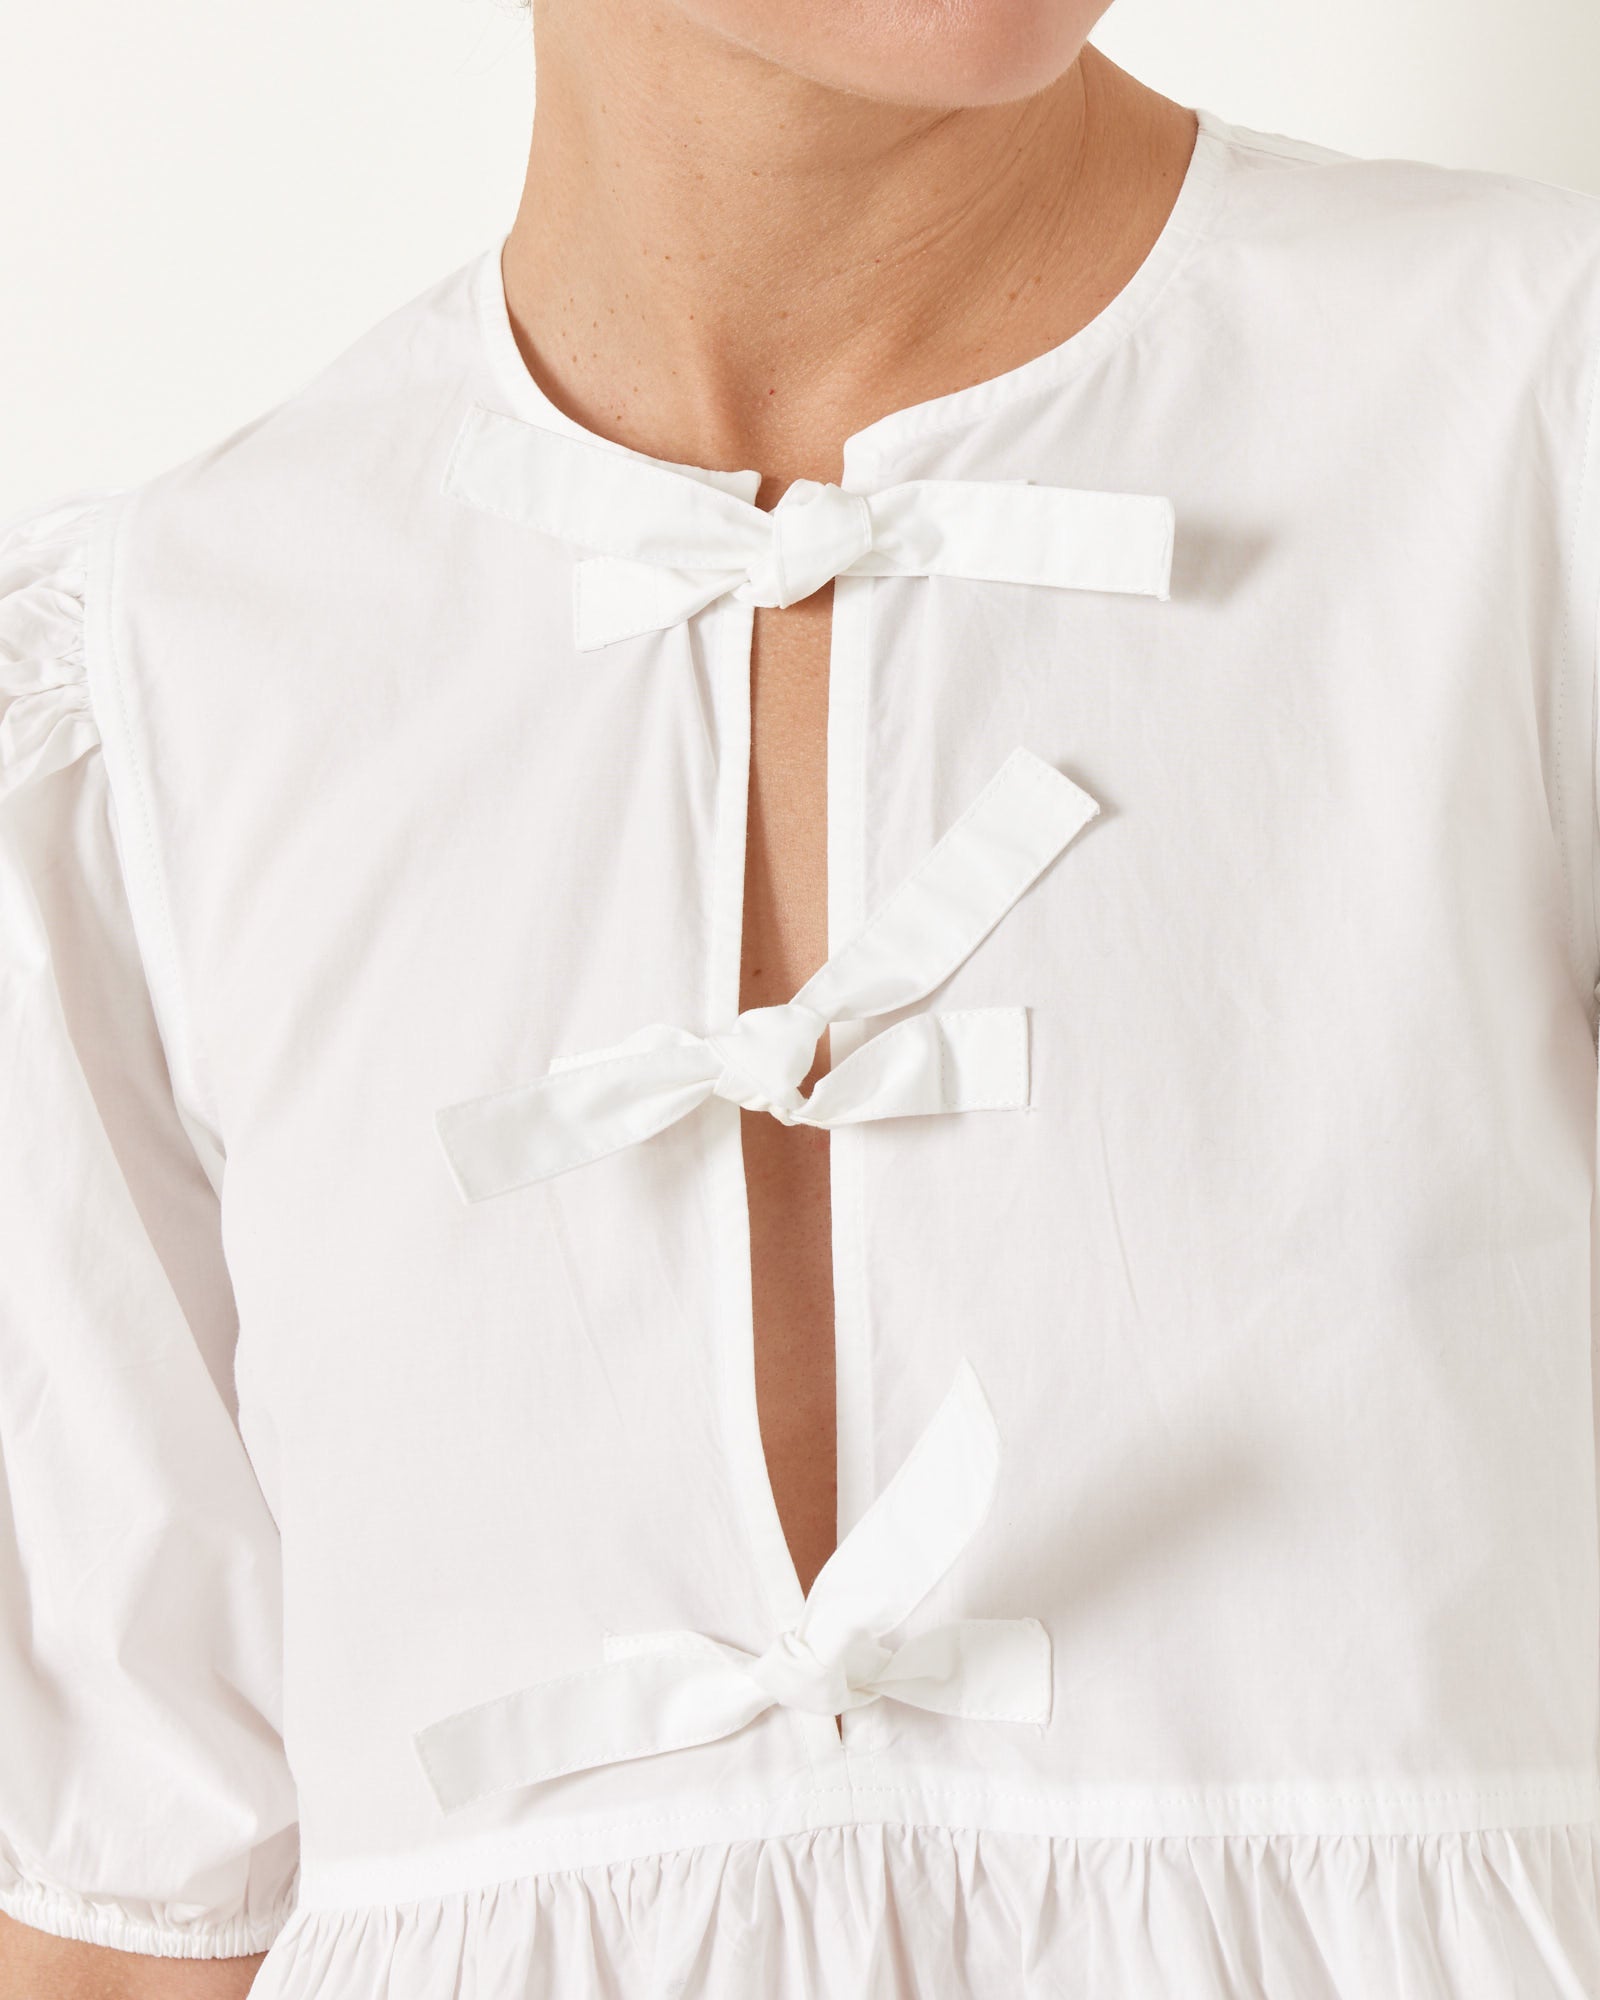 Tie String Mini Dress in Bright White